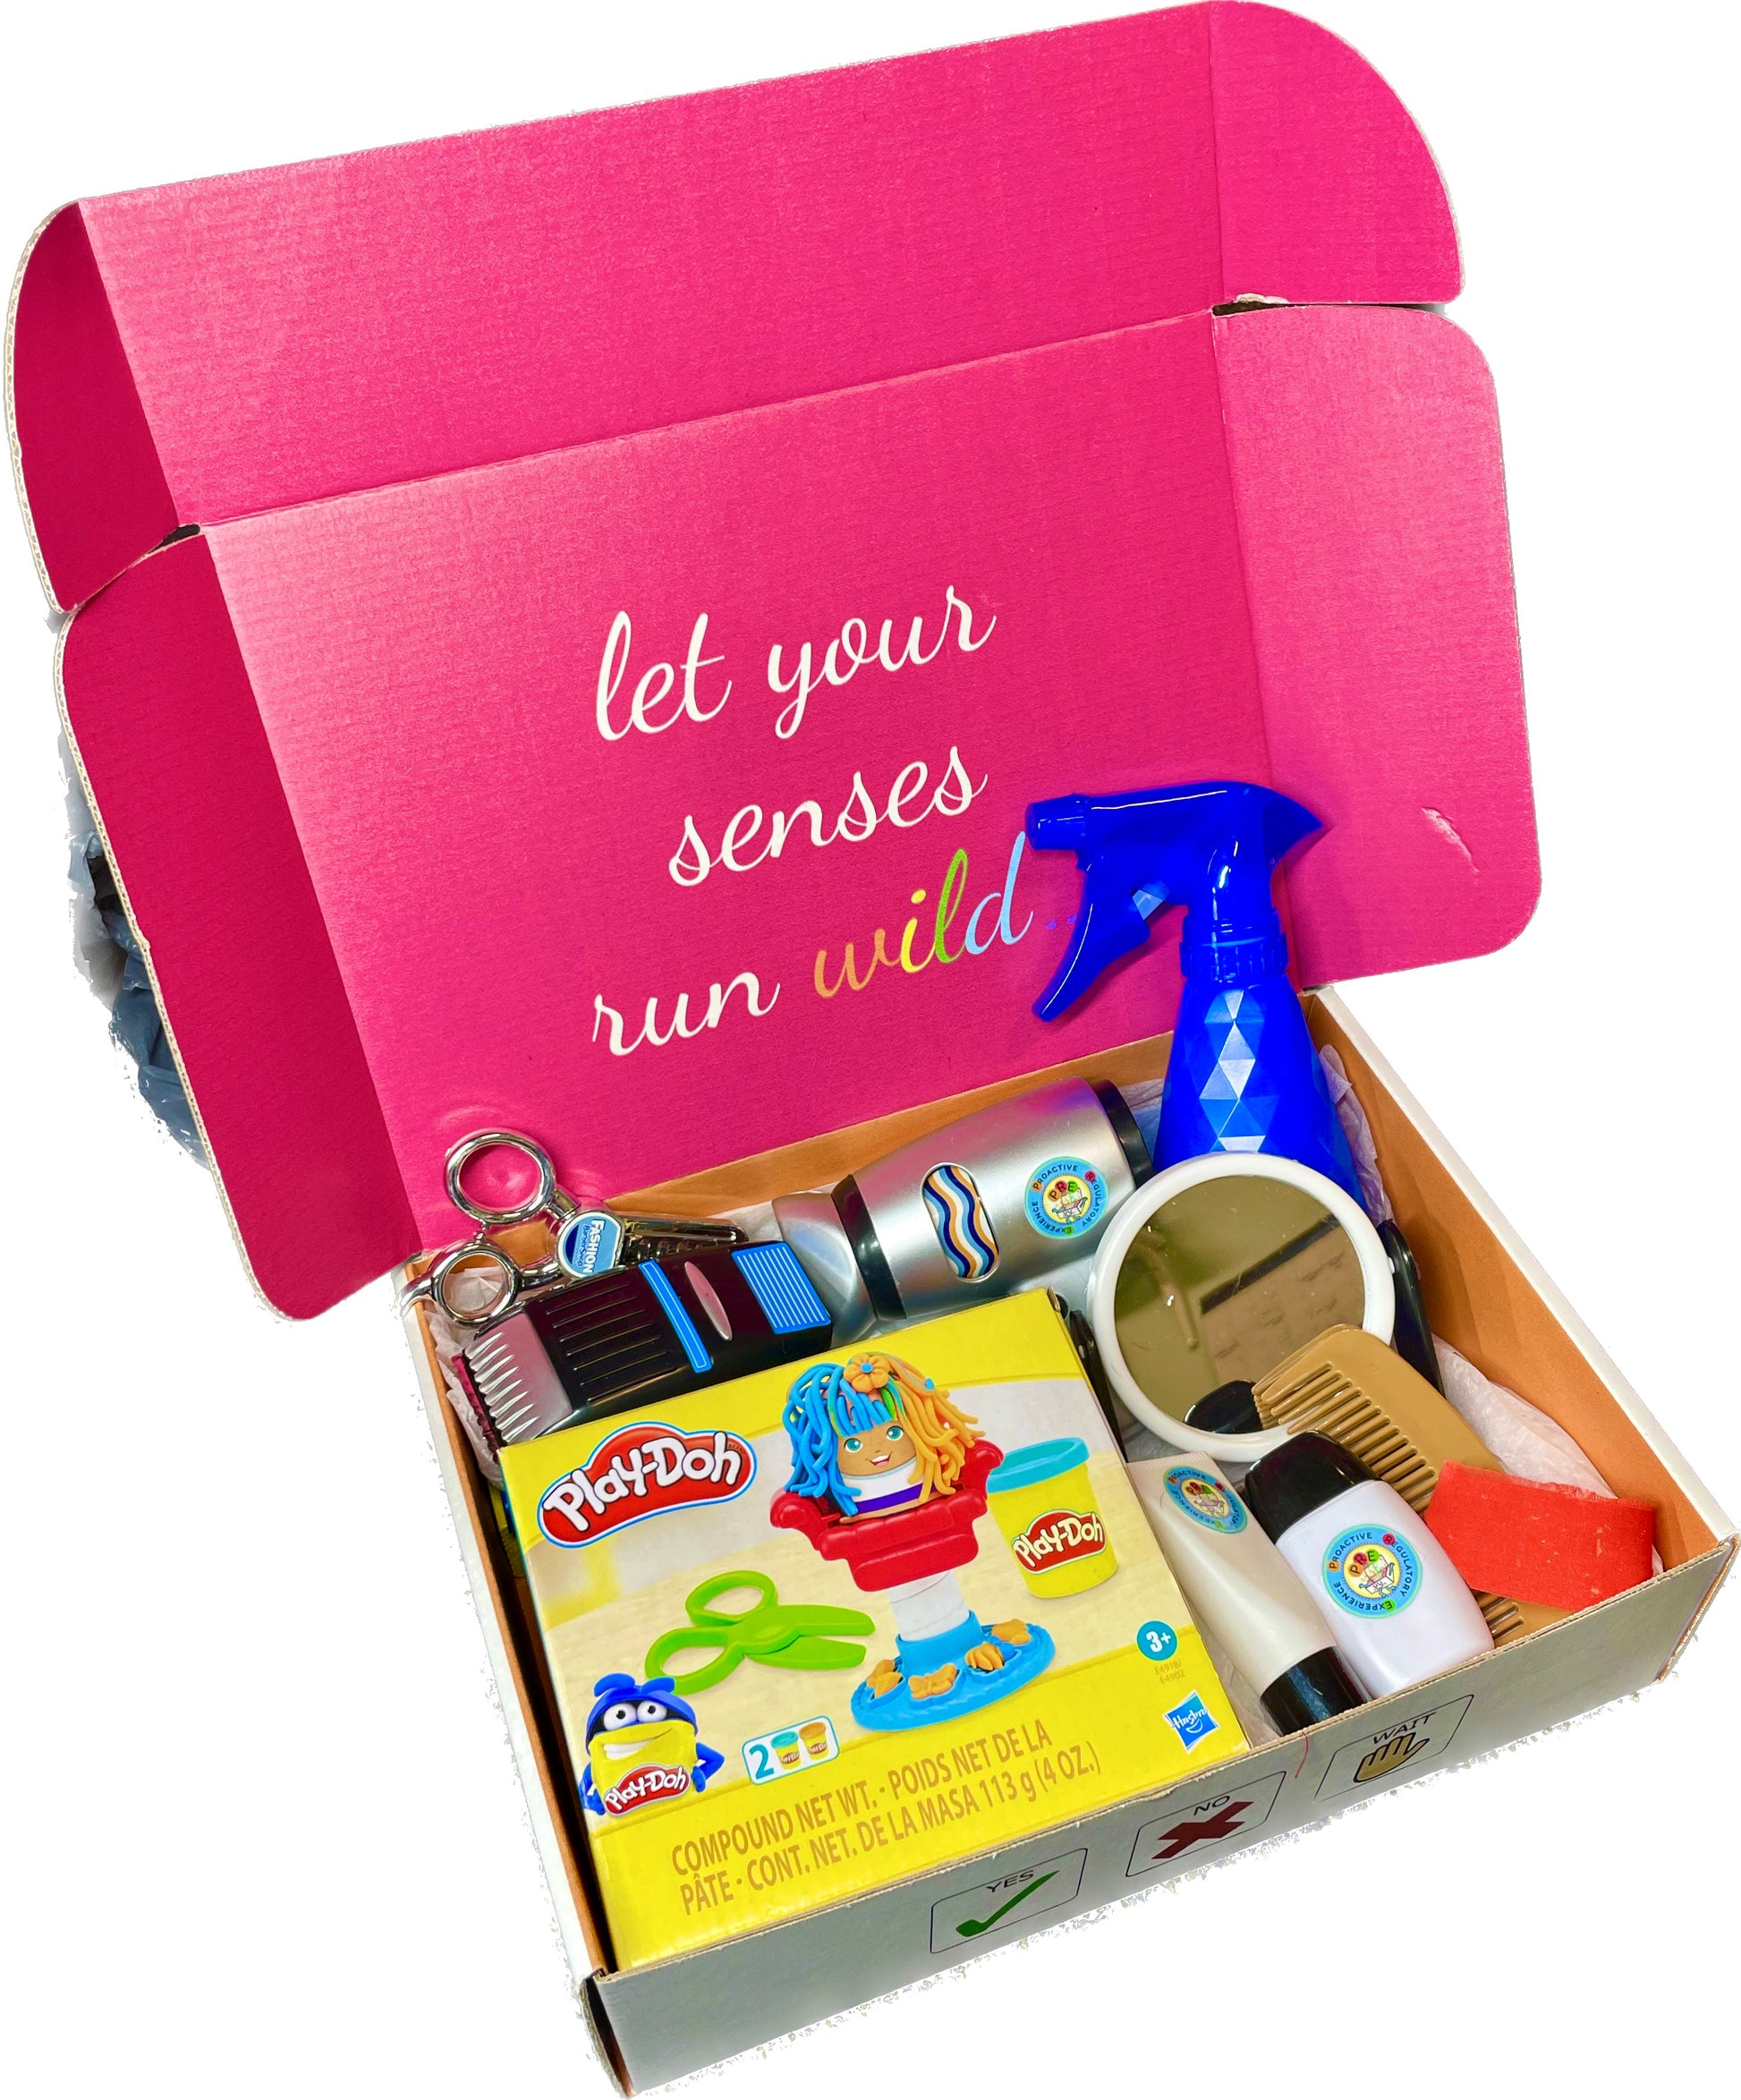 Haircut sensory box. Crazy Cuts Play-Doh mini, hair dresser tools, hairdresser cape.